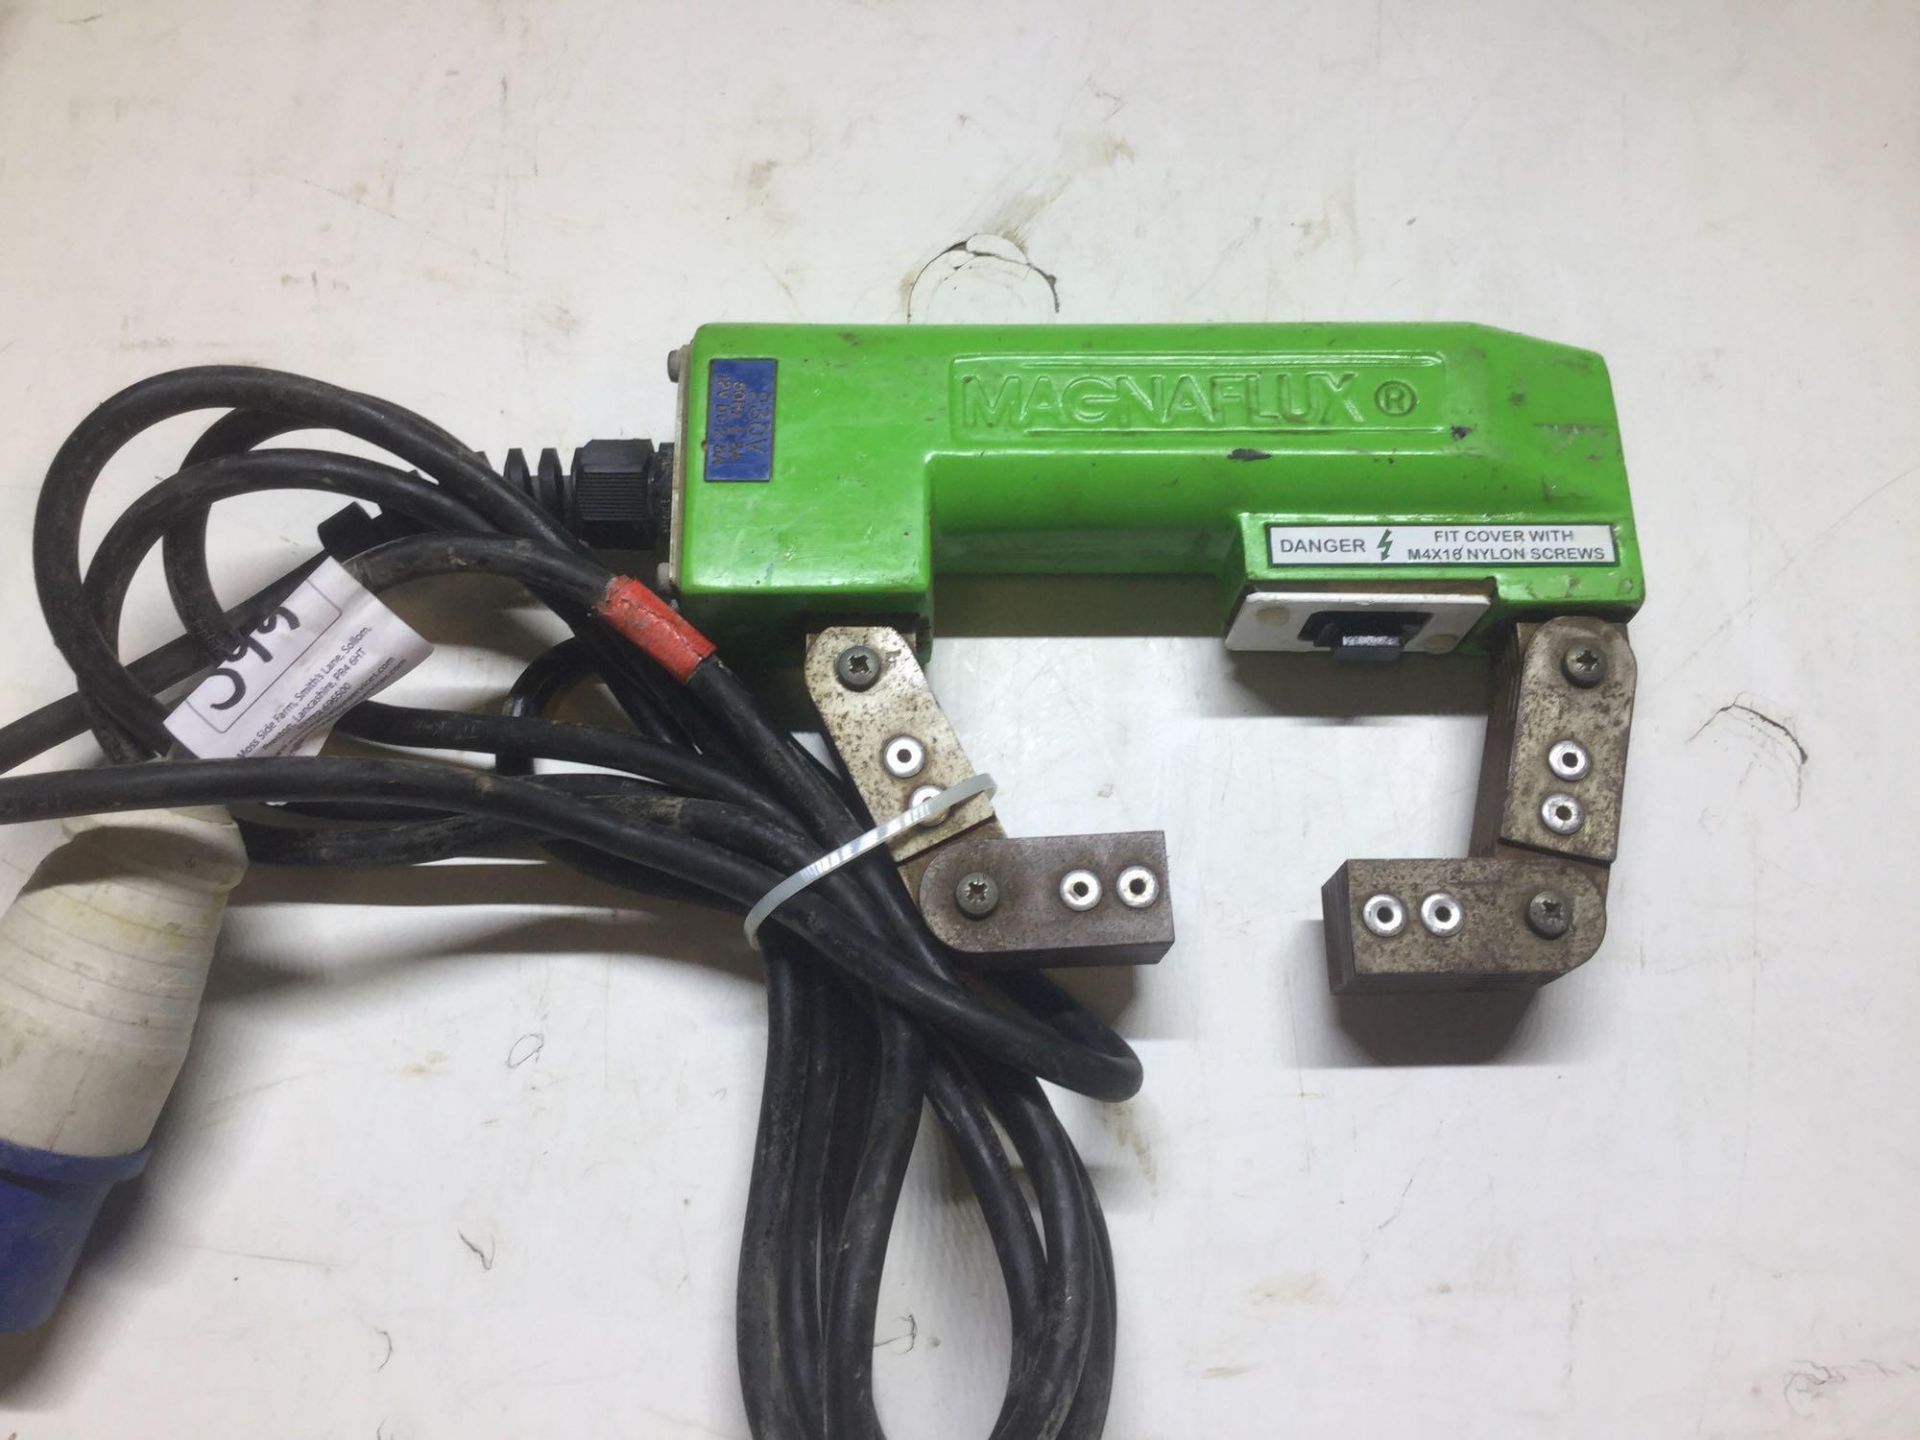 Magnaflux Electro Magnetic Yoke 240v / Weld inspection testing tool - Image 2 of 3